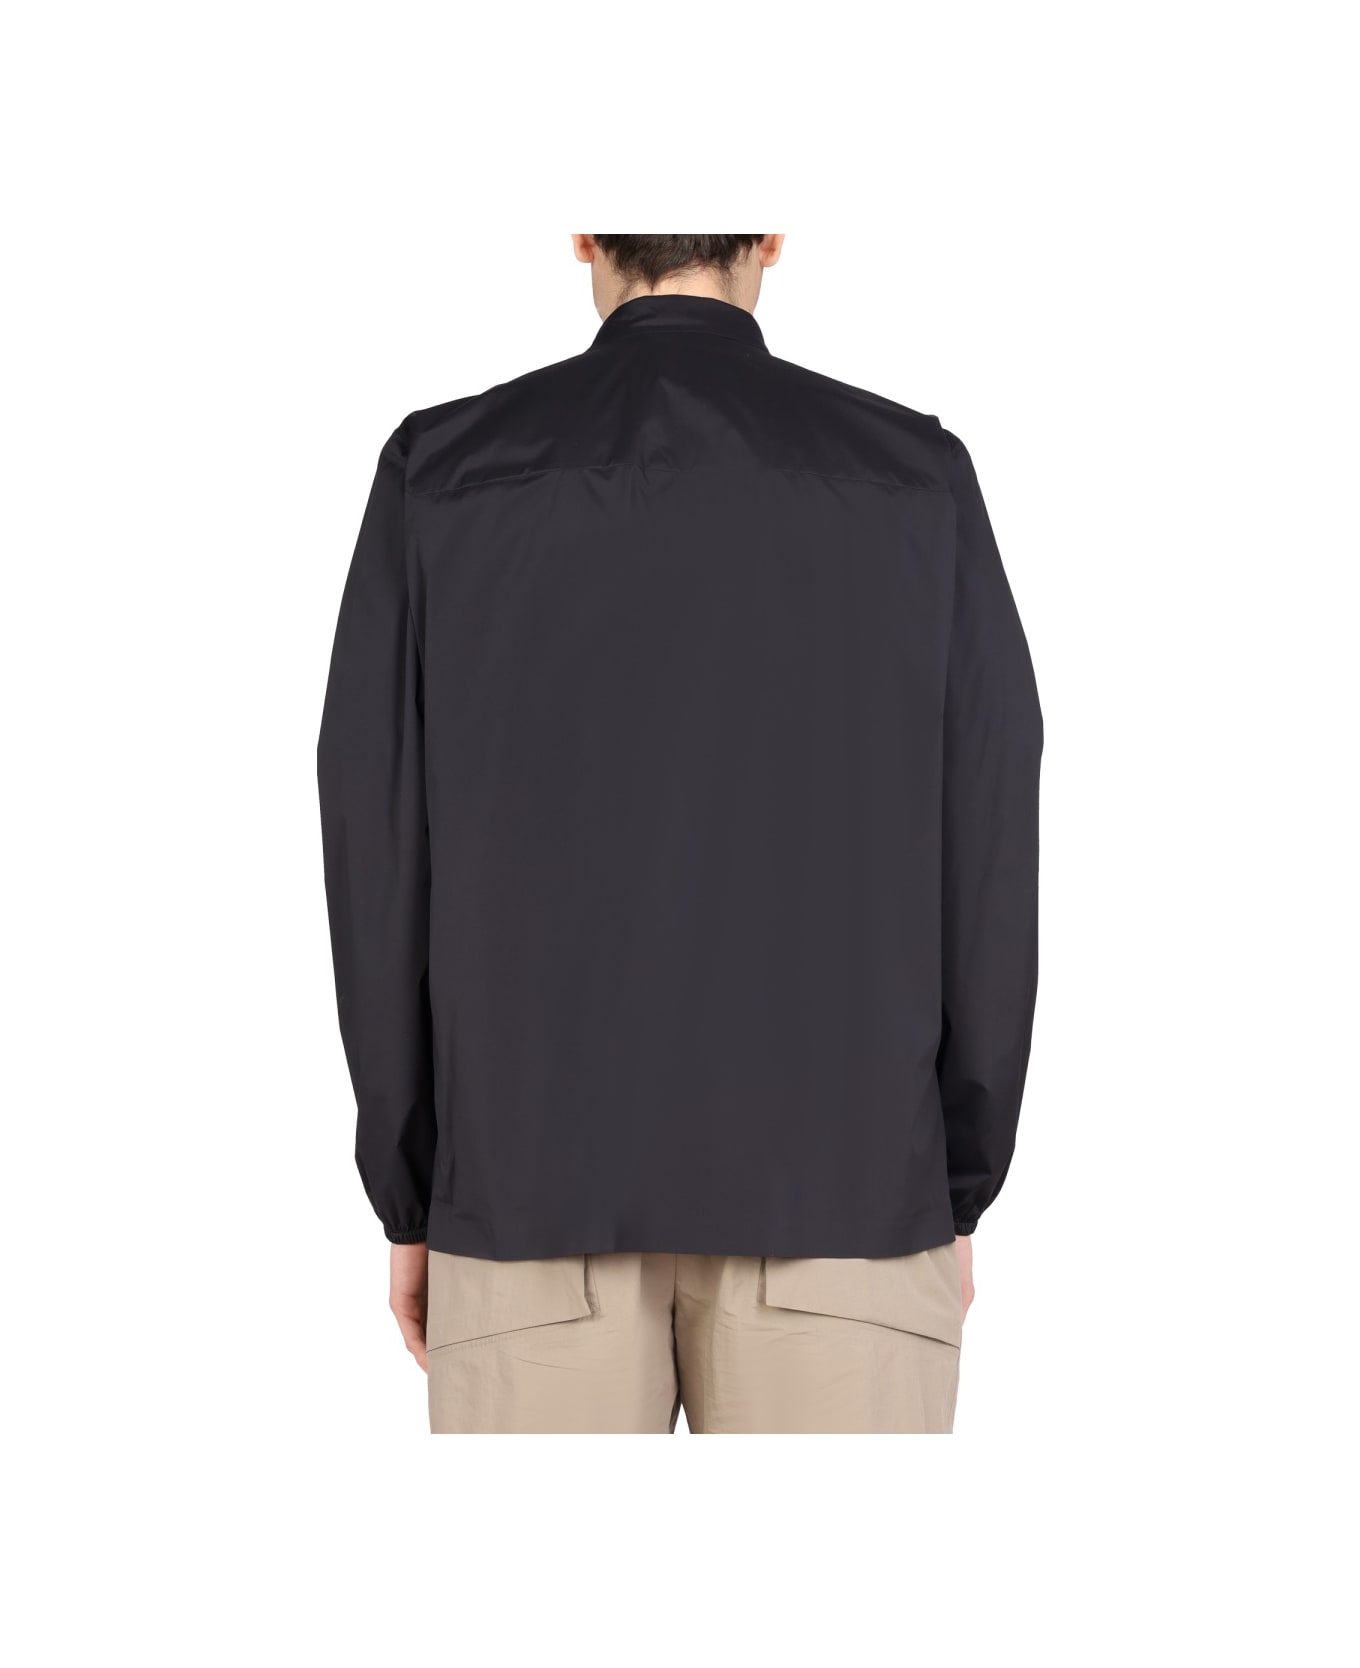 Monobi Shirt Jacket - BLACK ジャケット